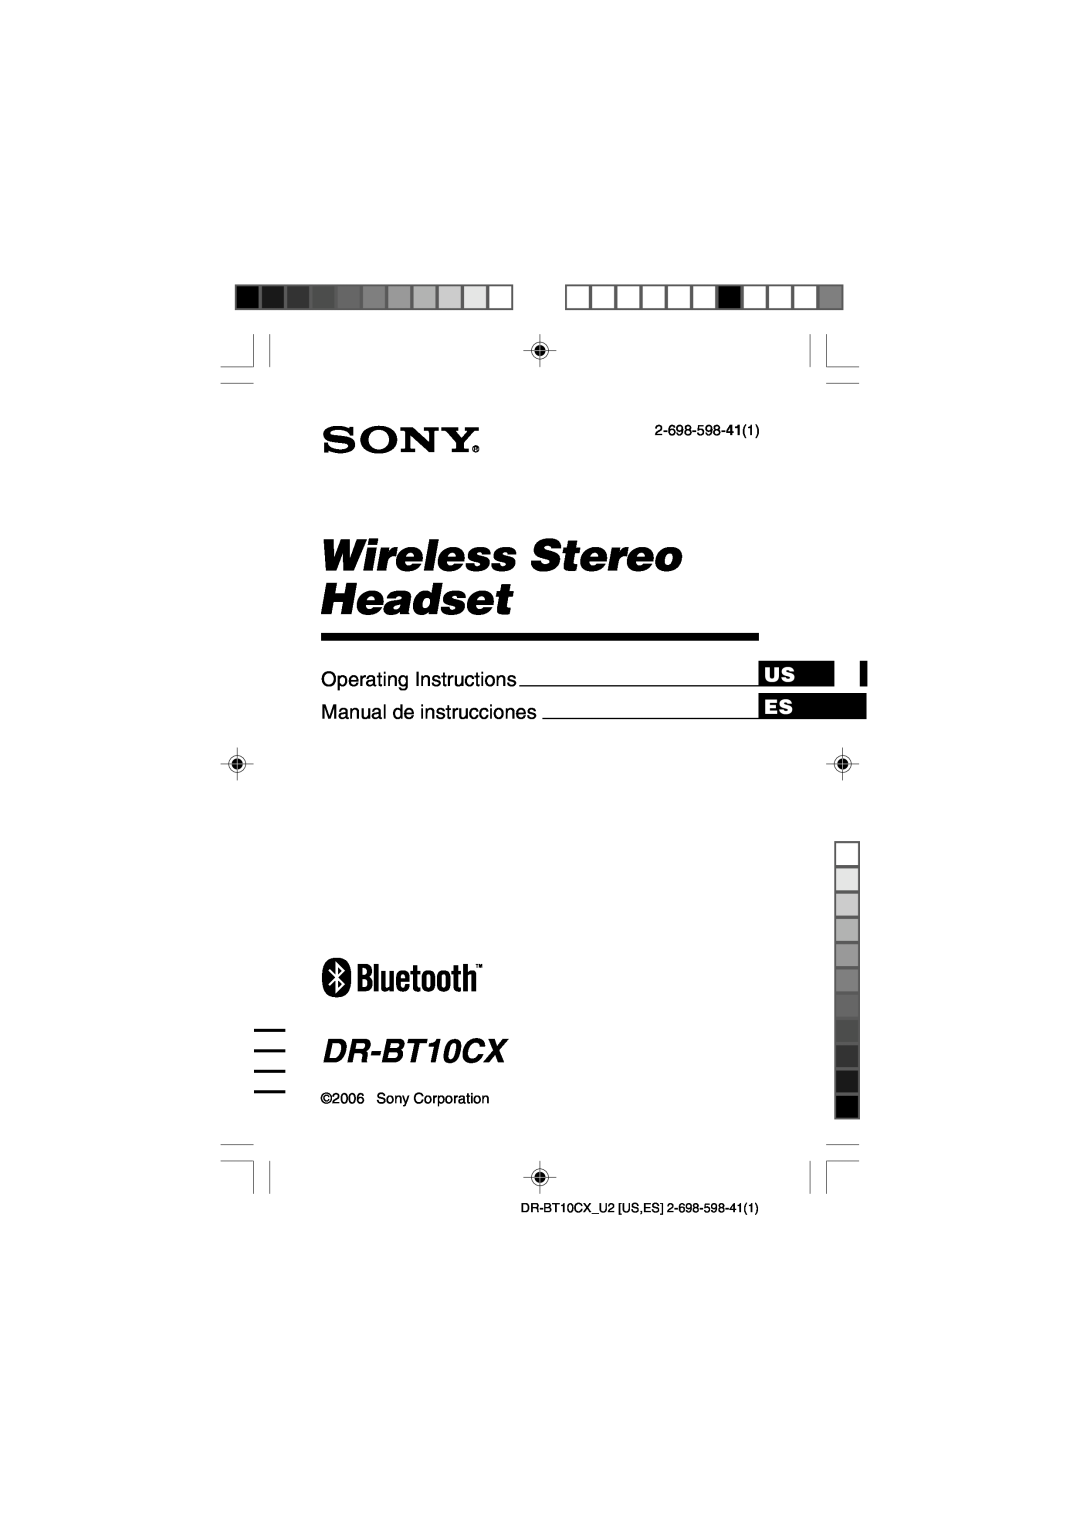 Sony DRBT10CX operating instructions Wireless Stereo Headset, DR-BT10CX, Operating Instructions, Manual de instrucciones 